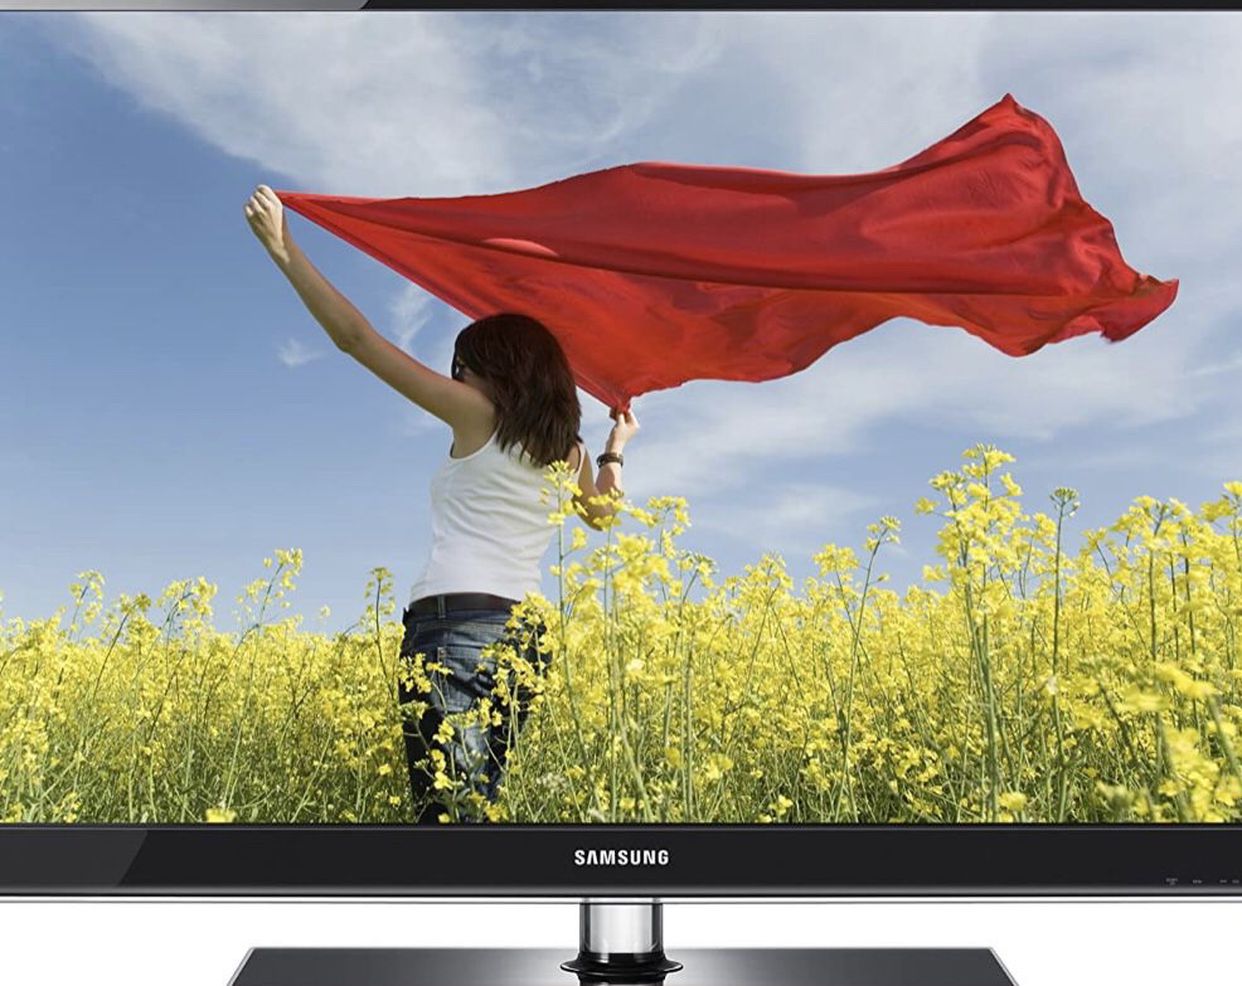 Samsung LN55C630 55-Inch 1080p 120 Hz LCD HDTV (Black)